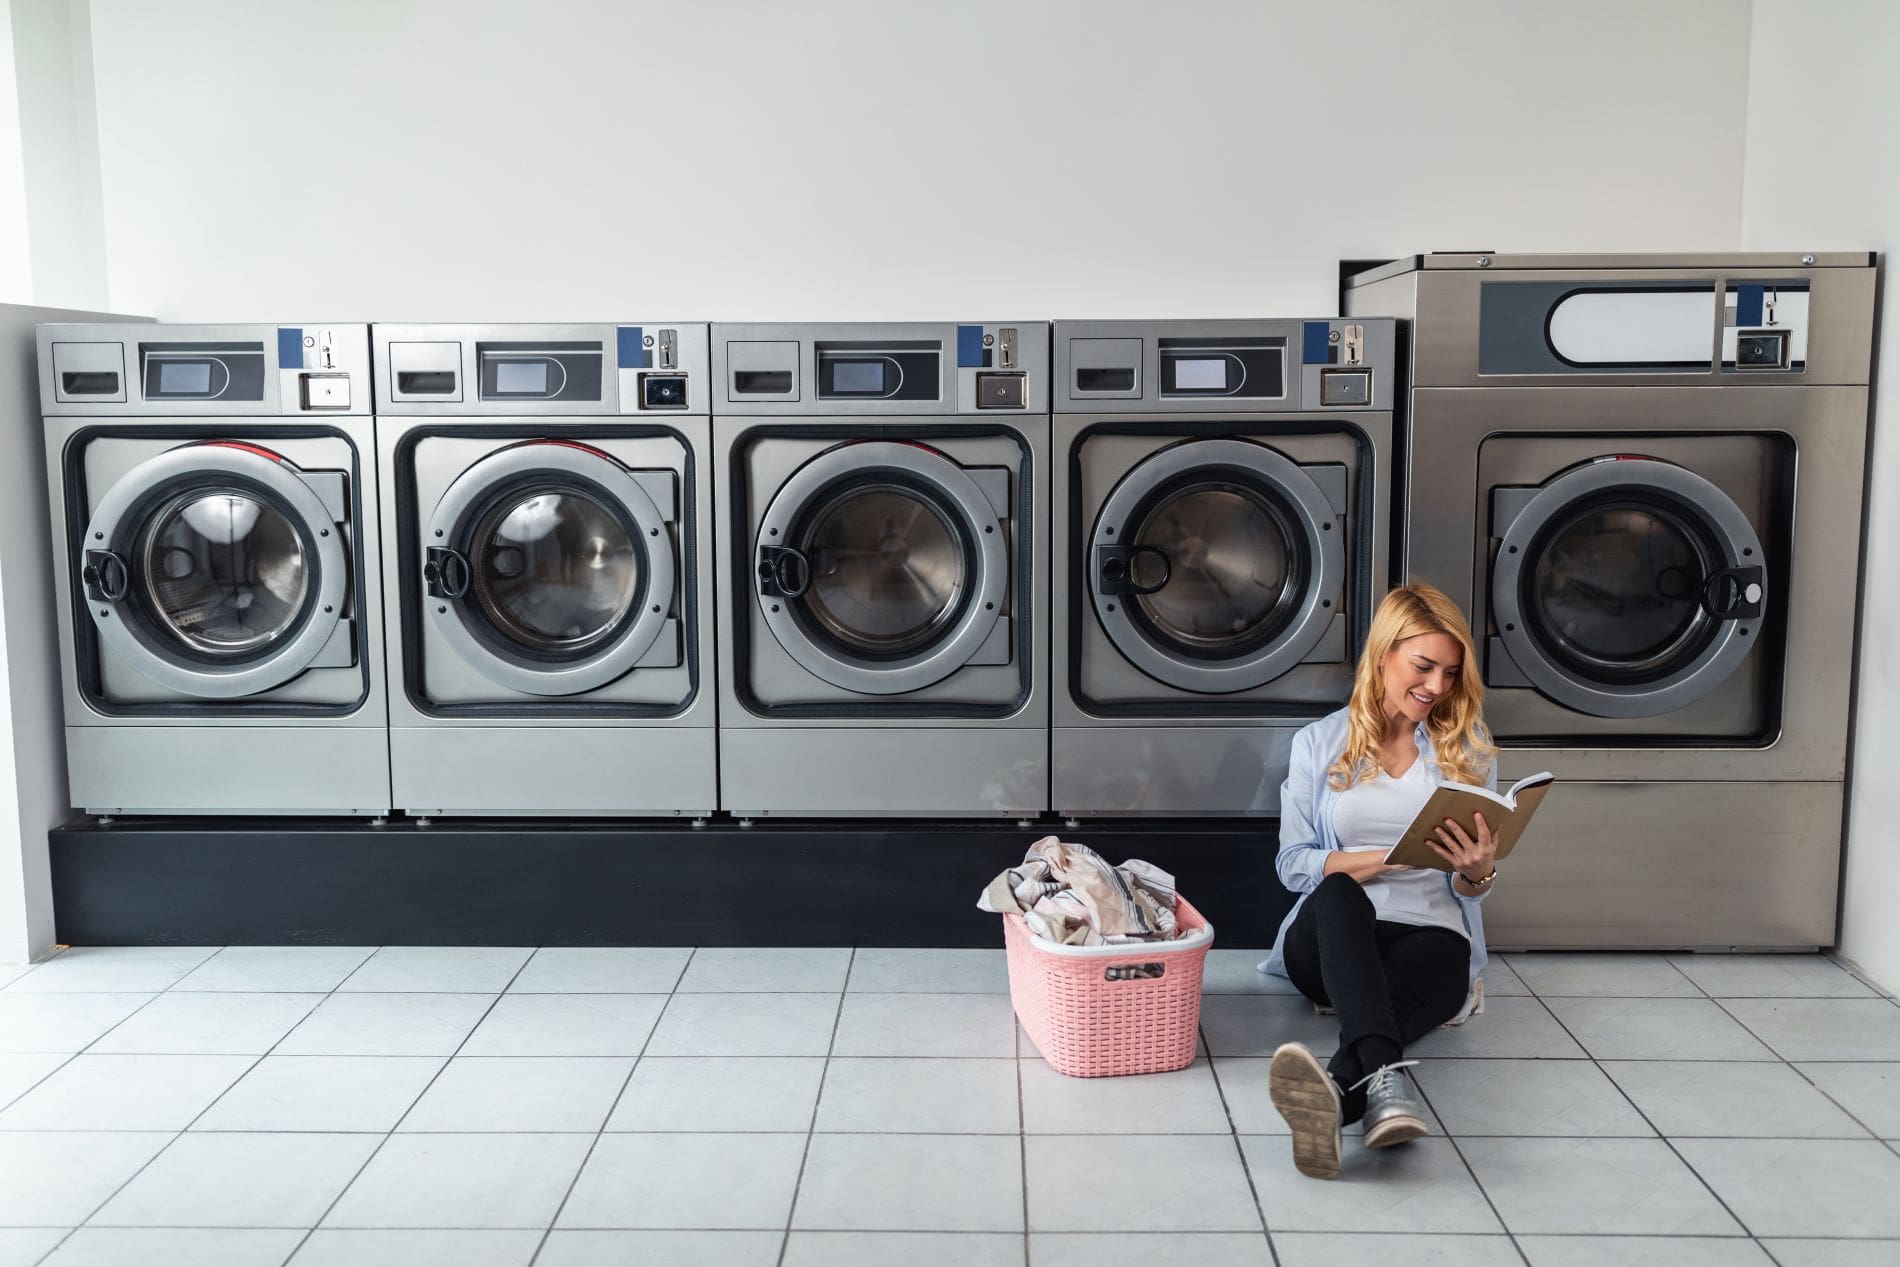 24 hour laundromat: BusinessHAB.com